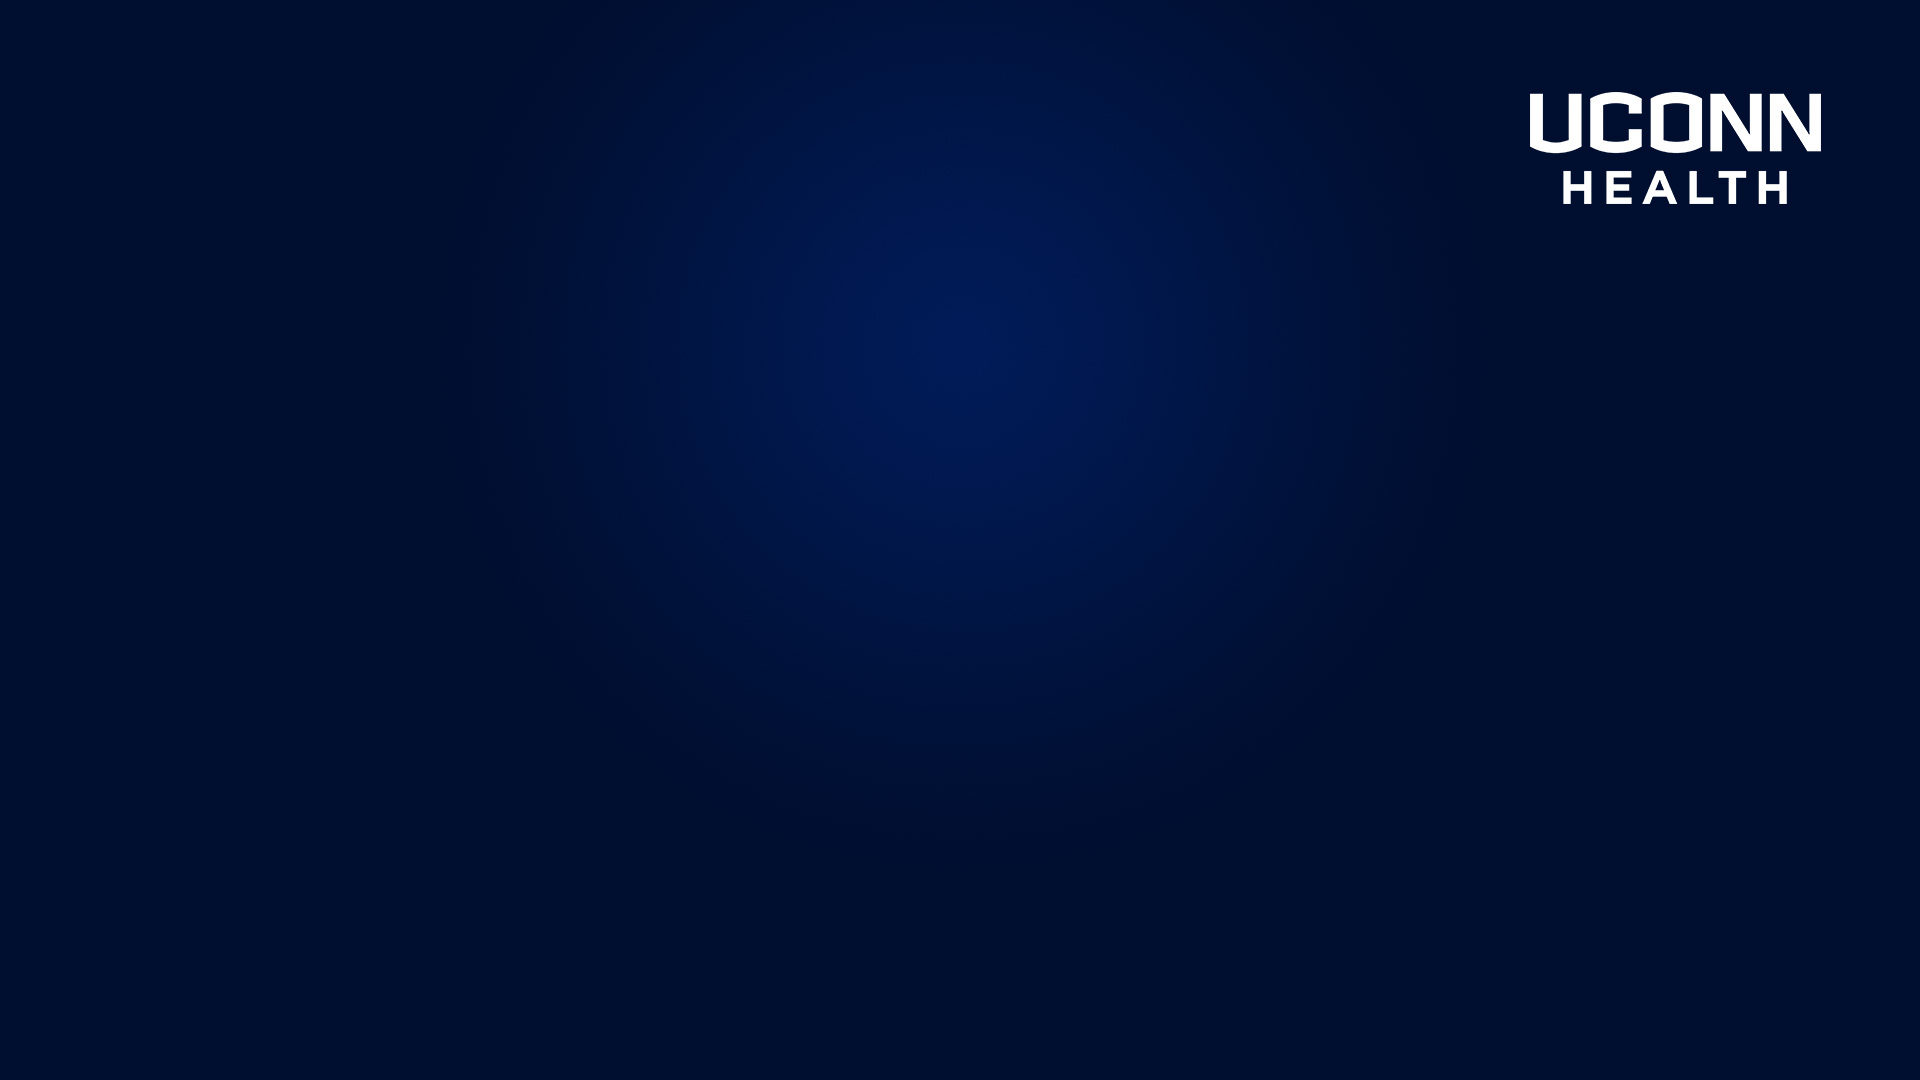 UConn Health blue background with logo